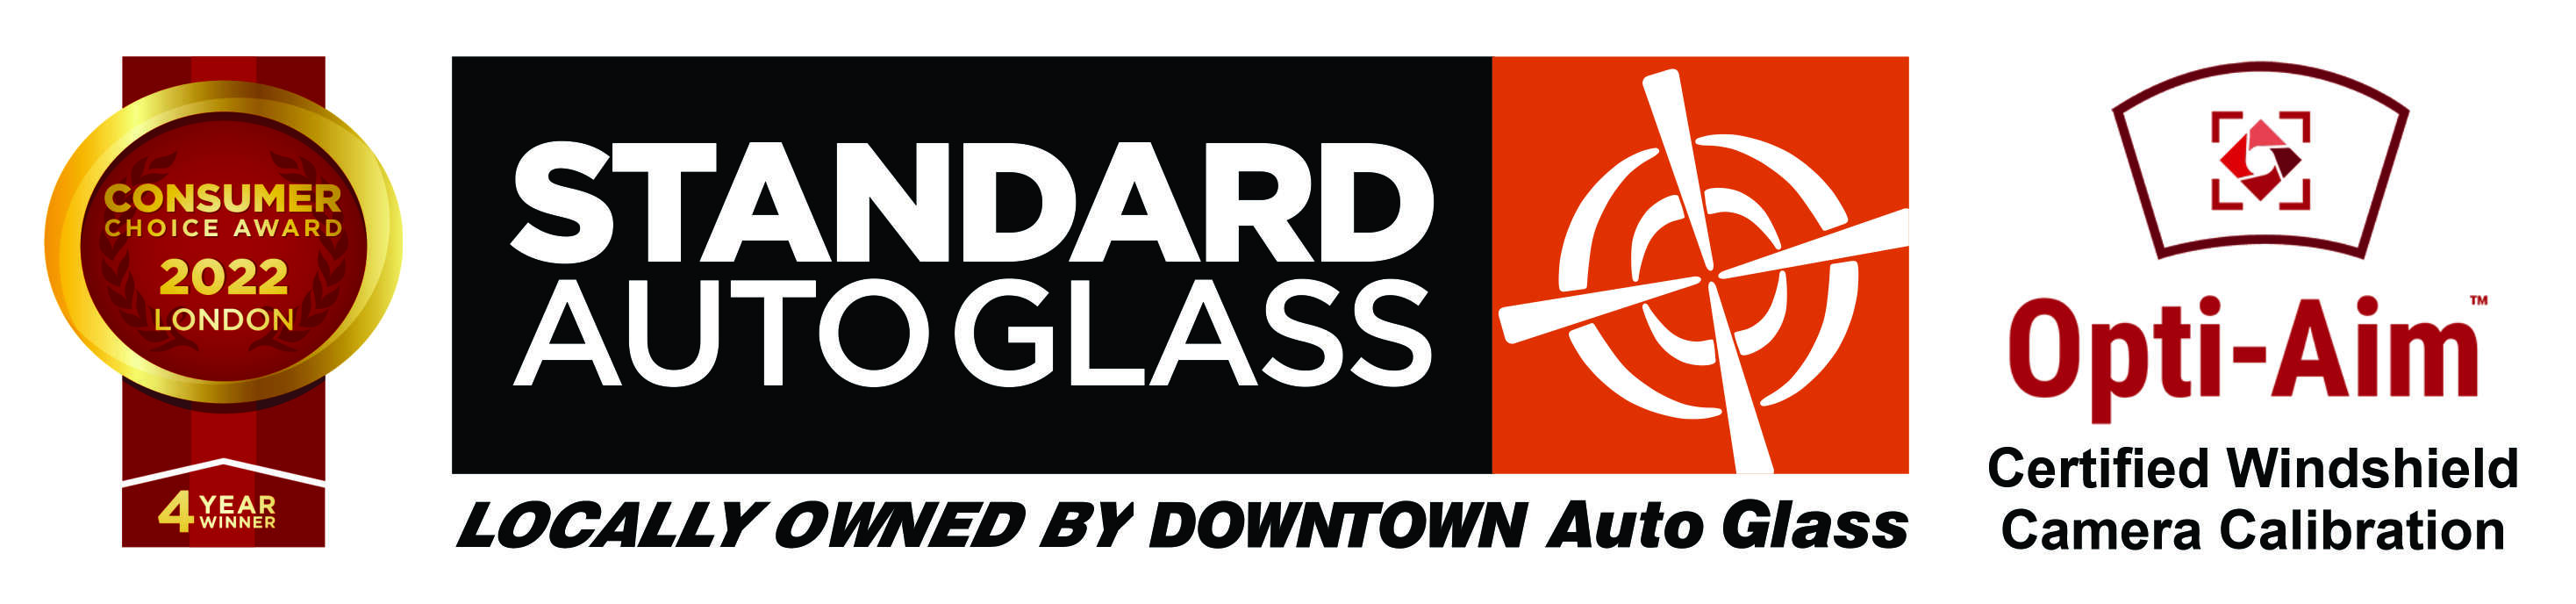 Standard Auto Glass